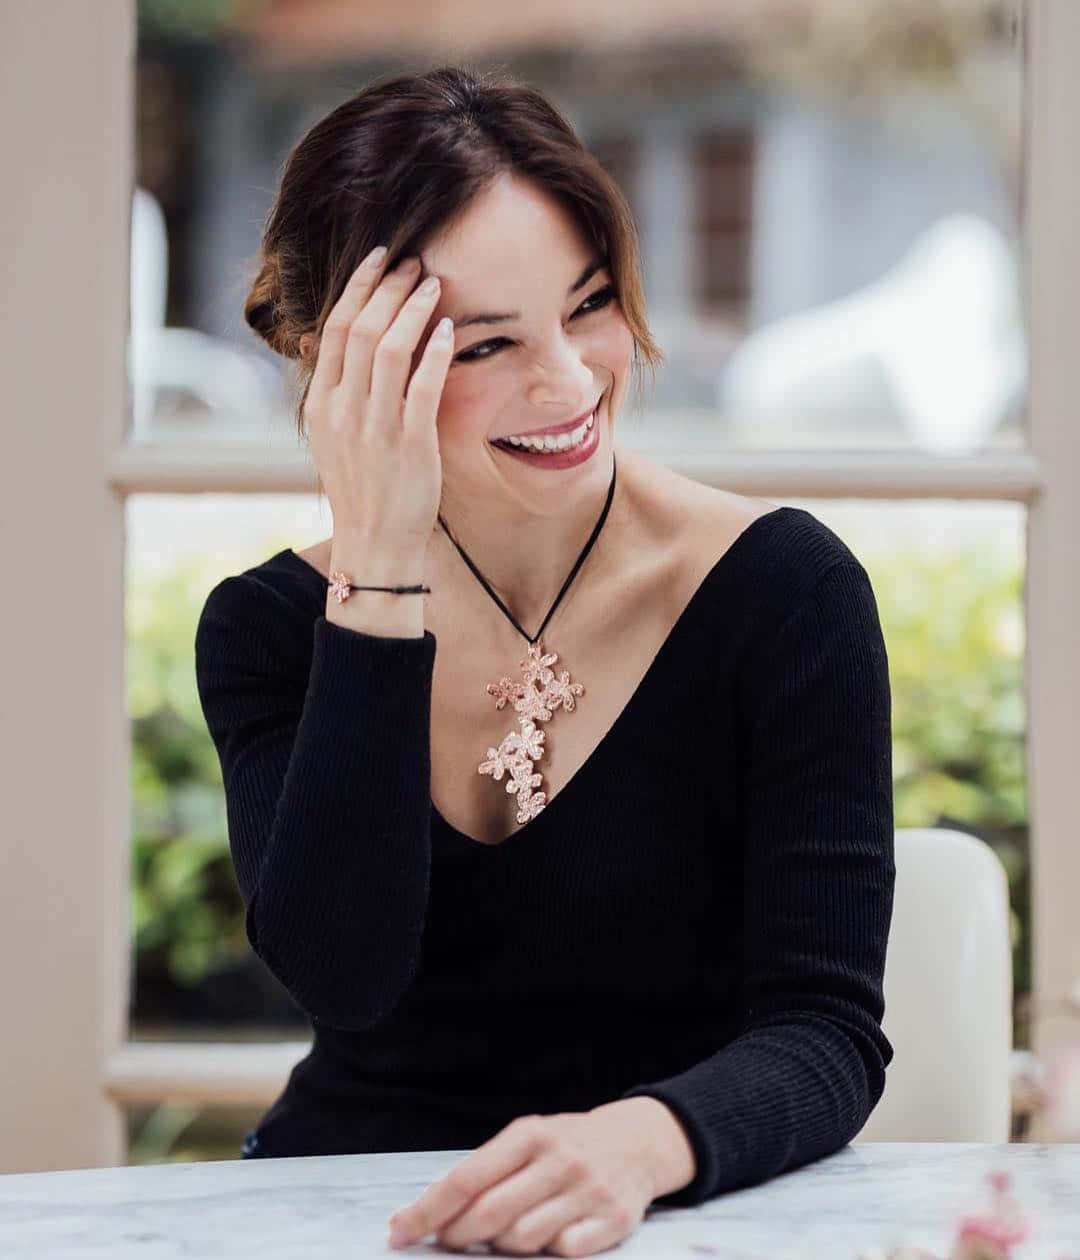 Smiling Woman Black Top Floral Necklace Wallpaper